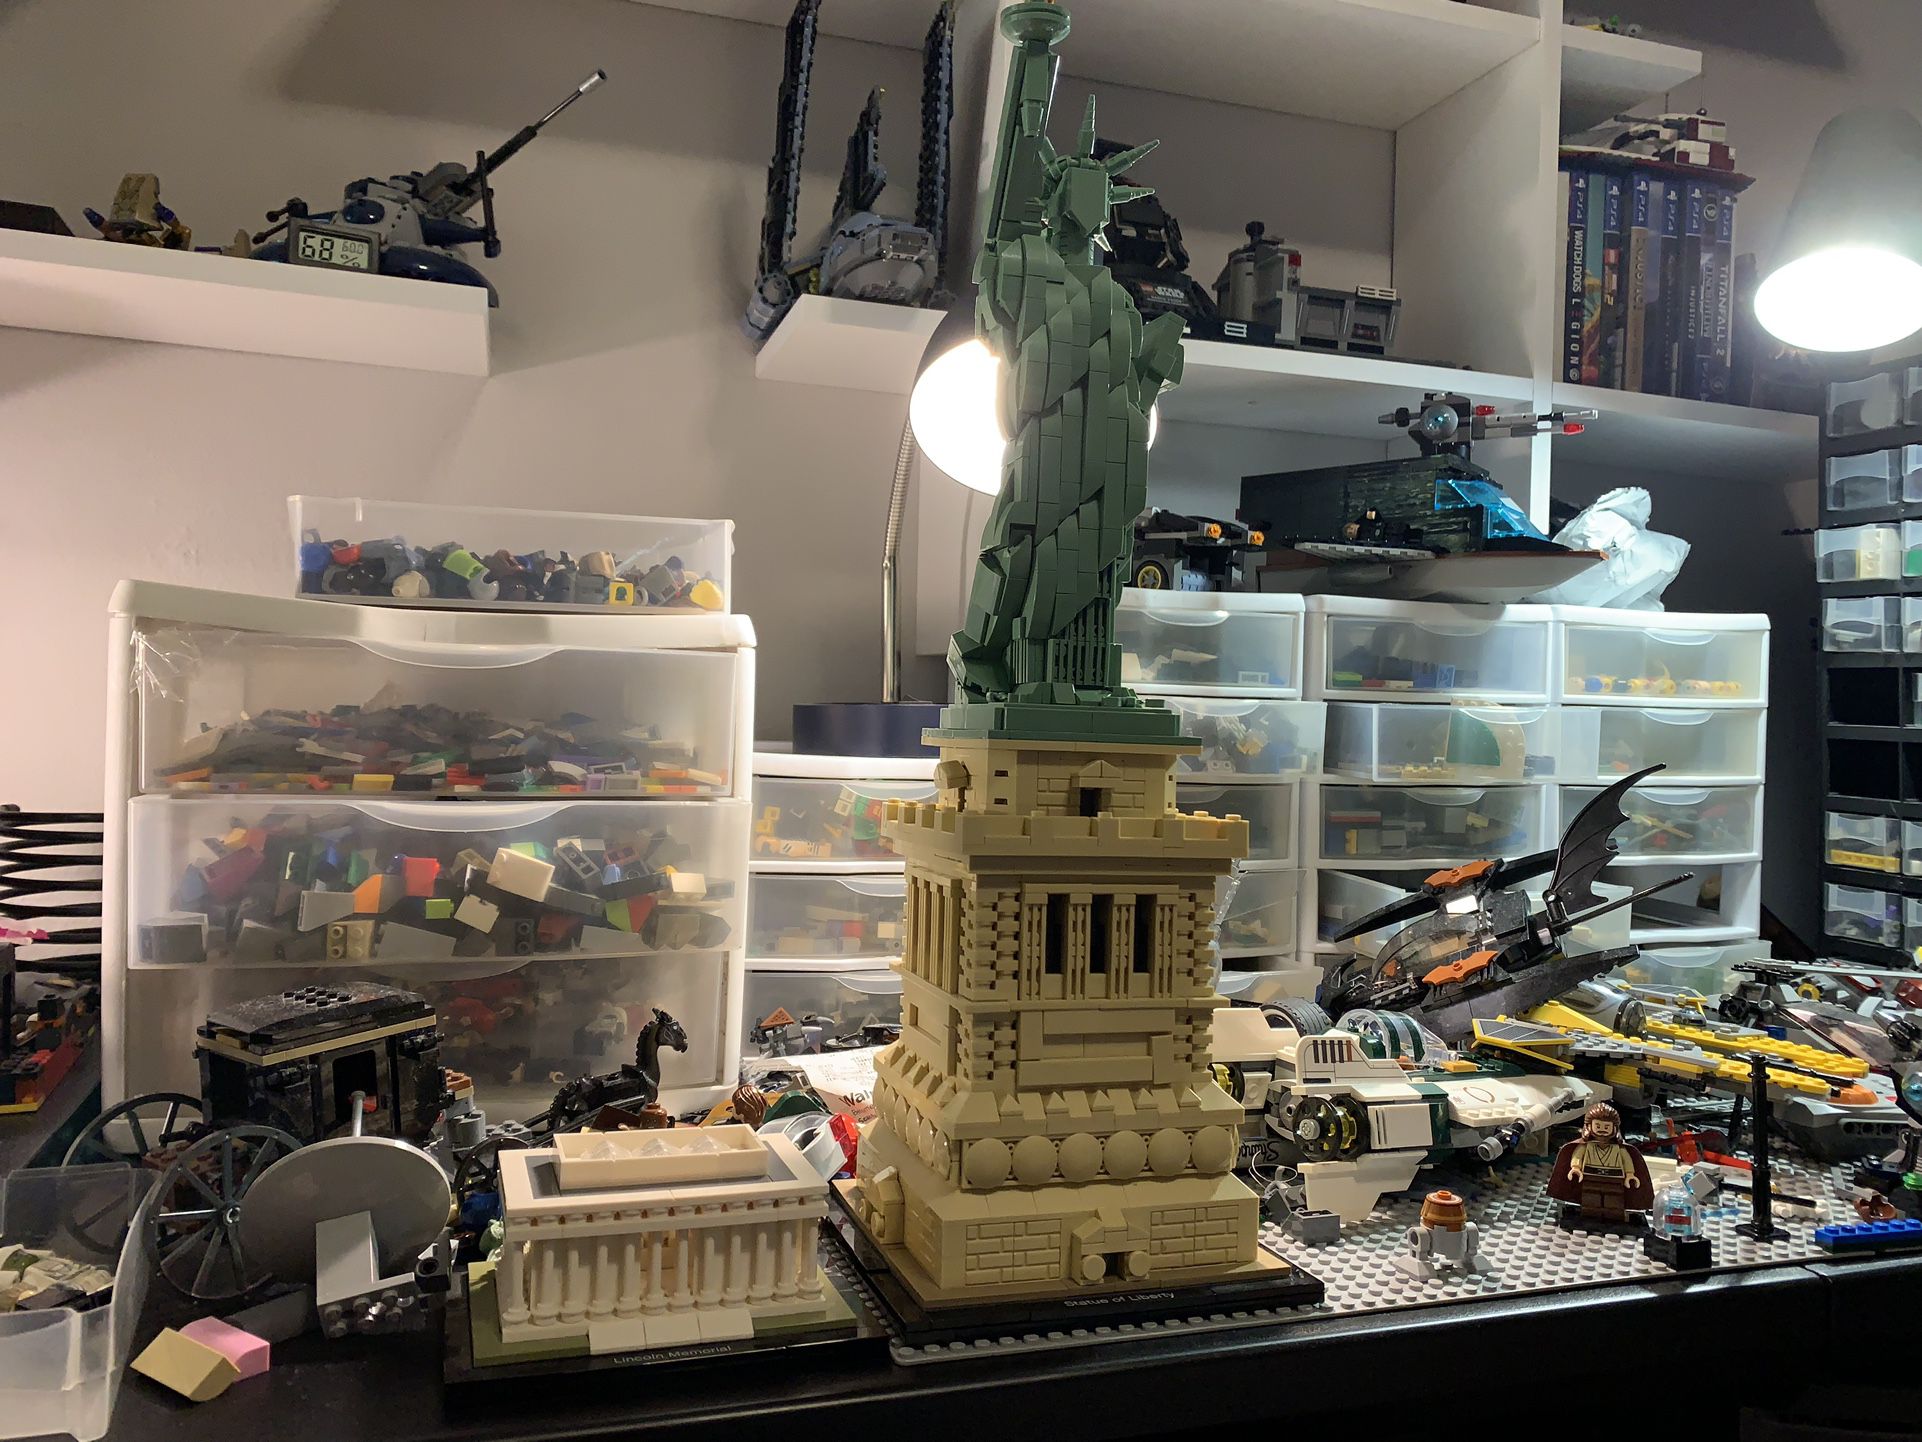 Statue de la liberté Lego Architecture liberty